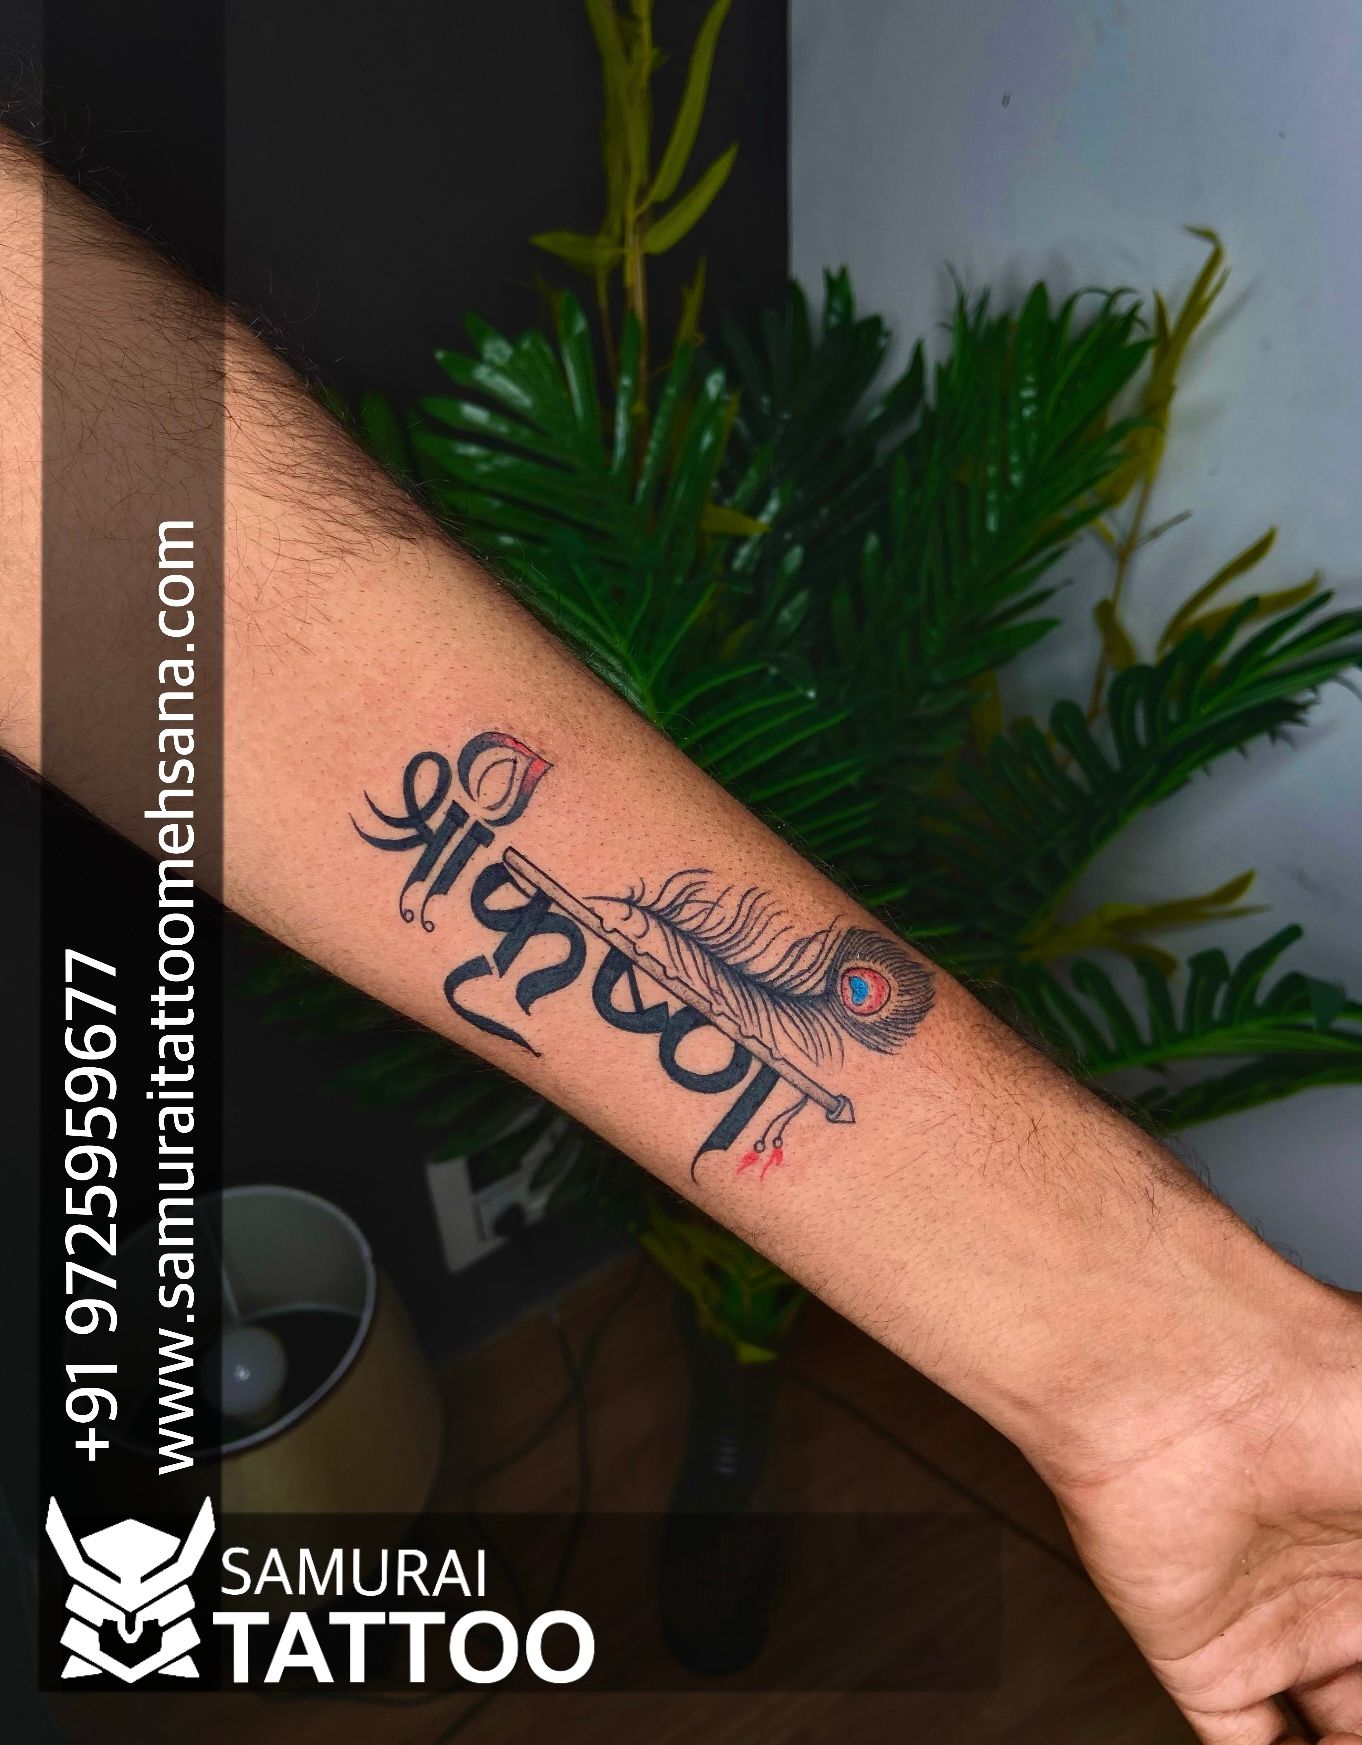 Crazy ink tattoo  Body piercing on Twitter RADHE NAME TATTOO radhe name tattoo  design for men onFor more info visithttpstcoK9txn61Vtl  httpstcoYLqnS4Id8r  Twitter